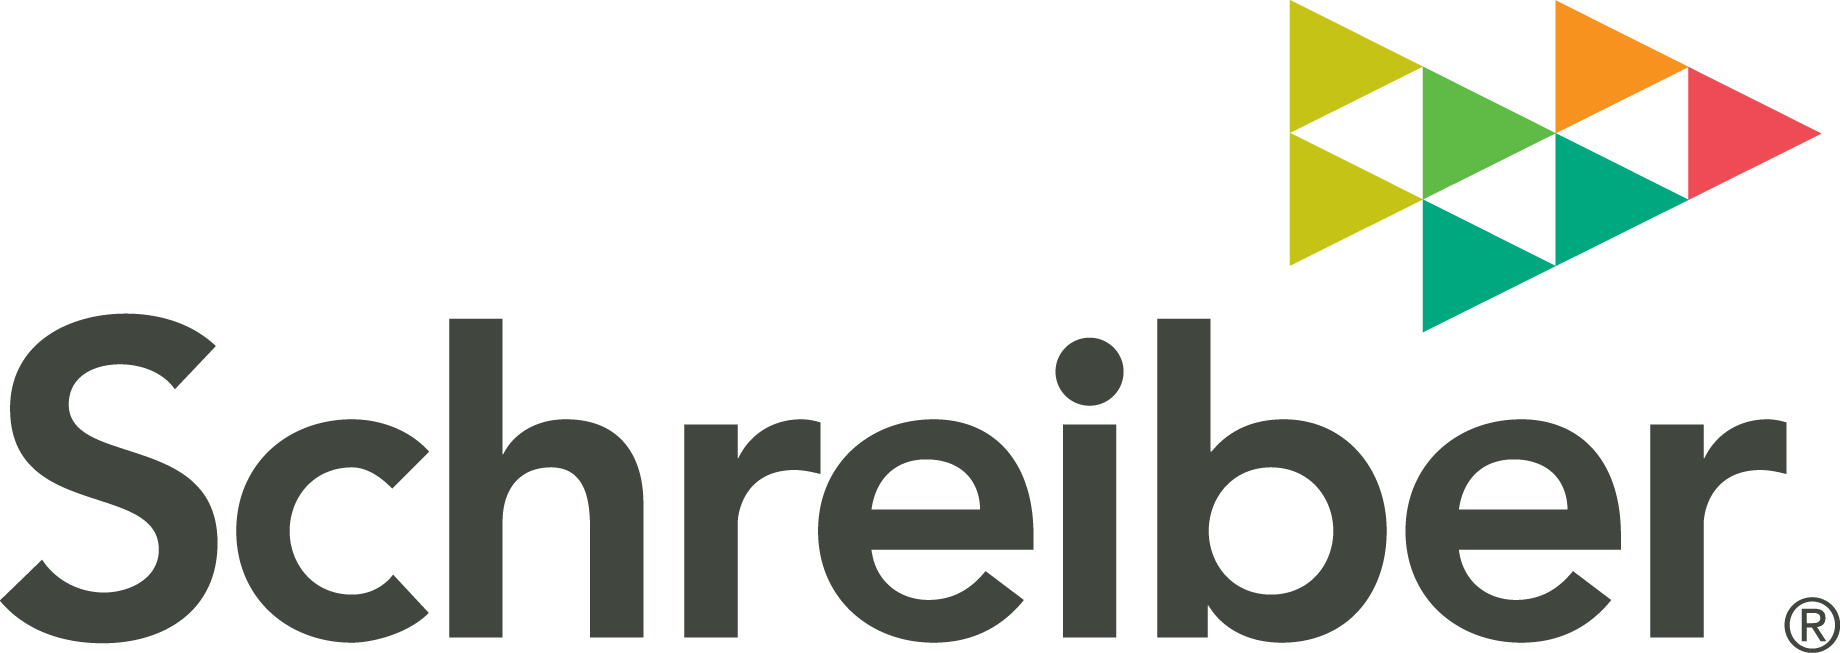 schreiber-logo-hi-res-color.png